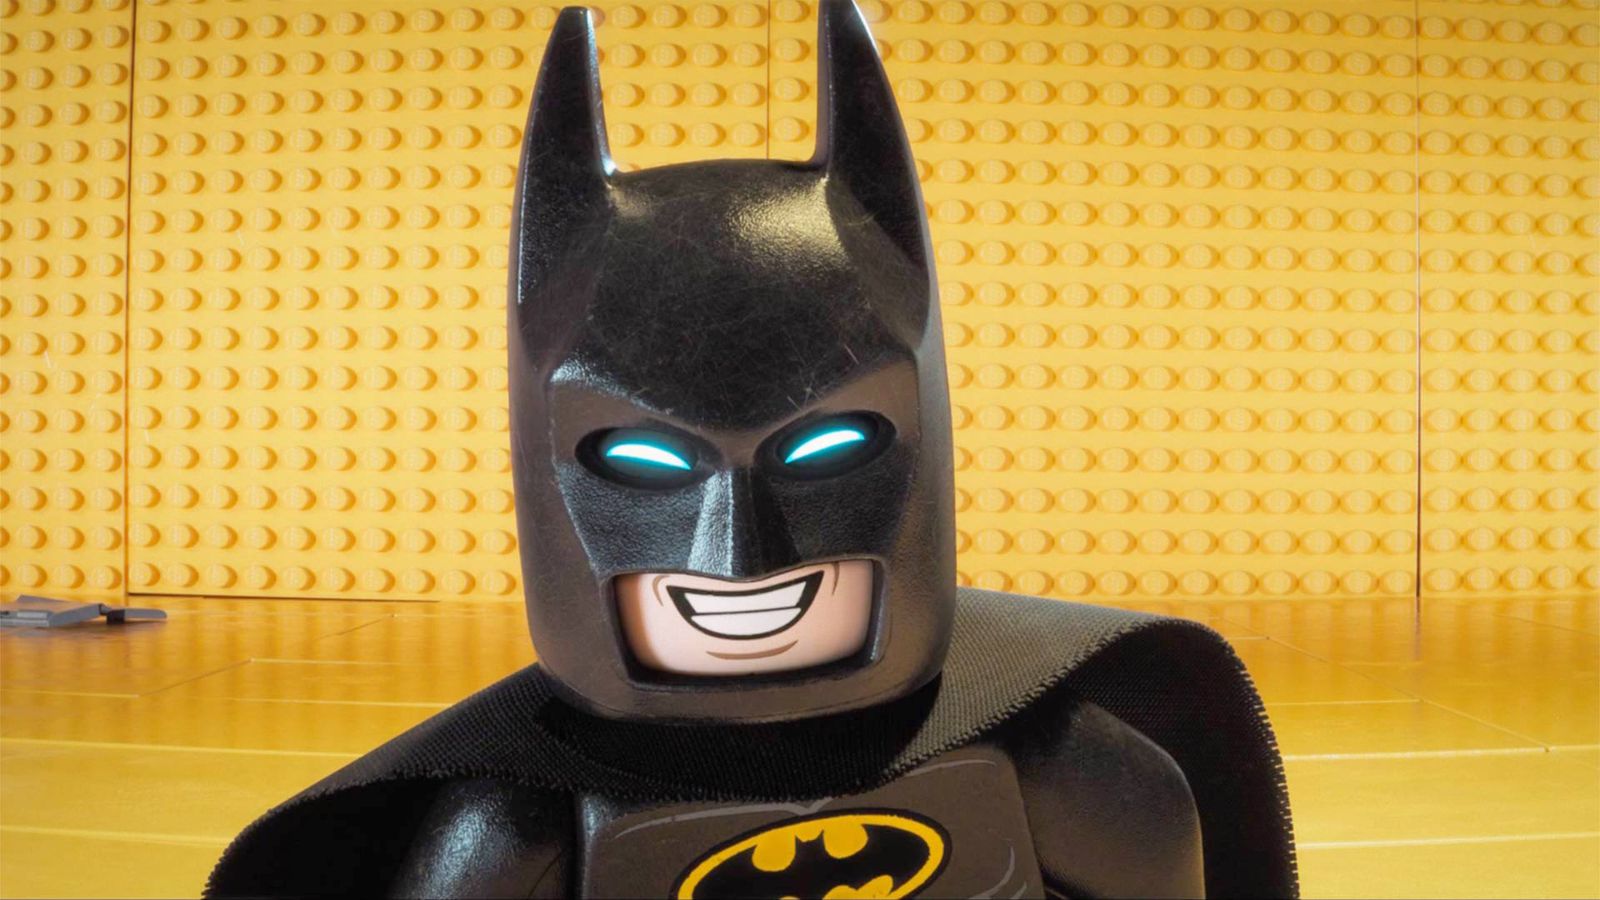 The Lego Batman Movie is a terrifically fun, playful addition to the Batman canon